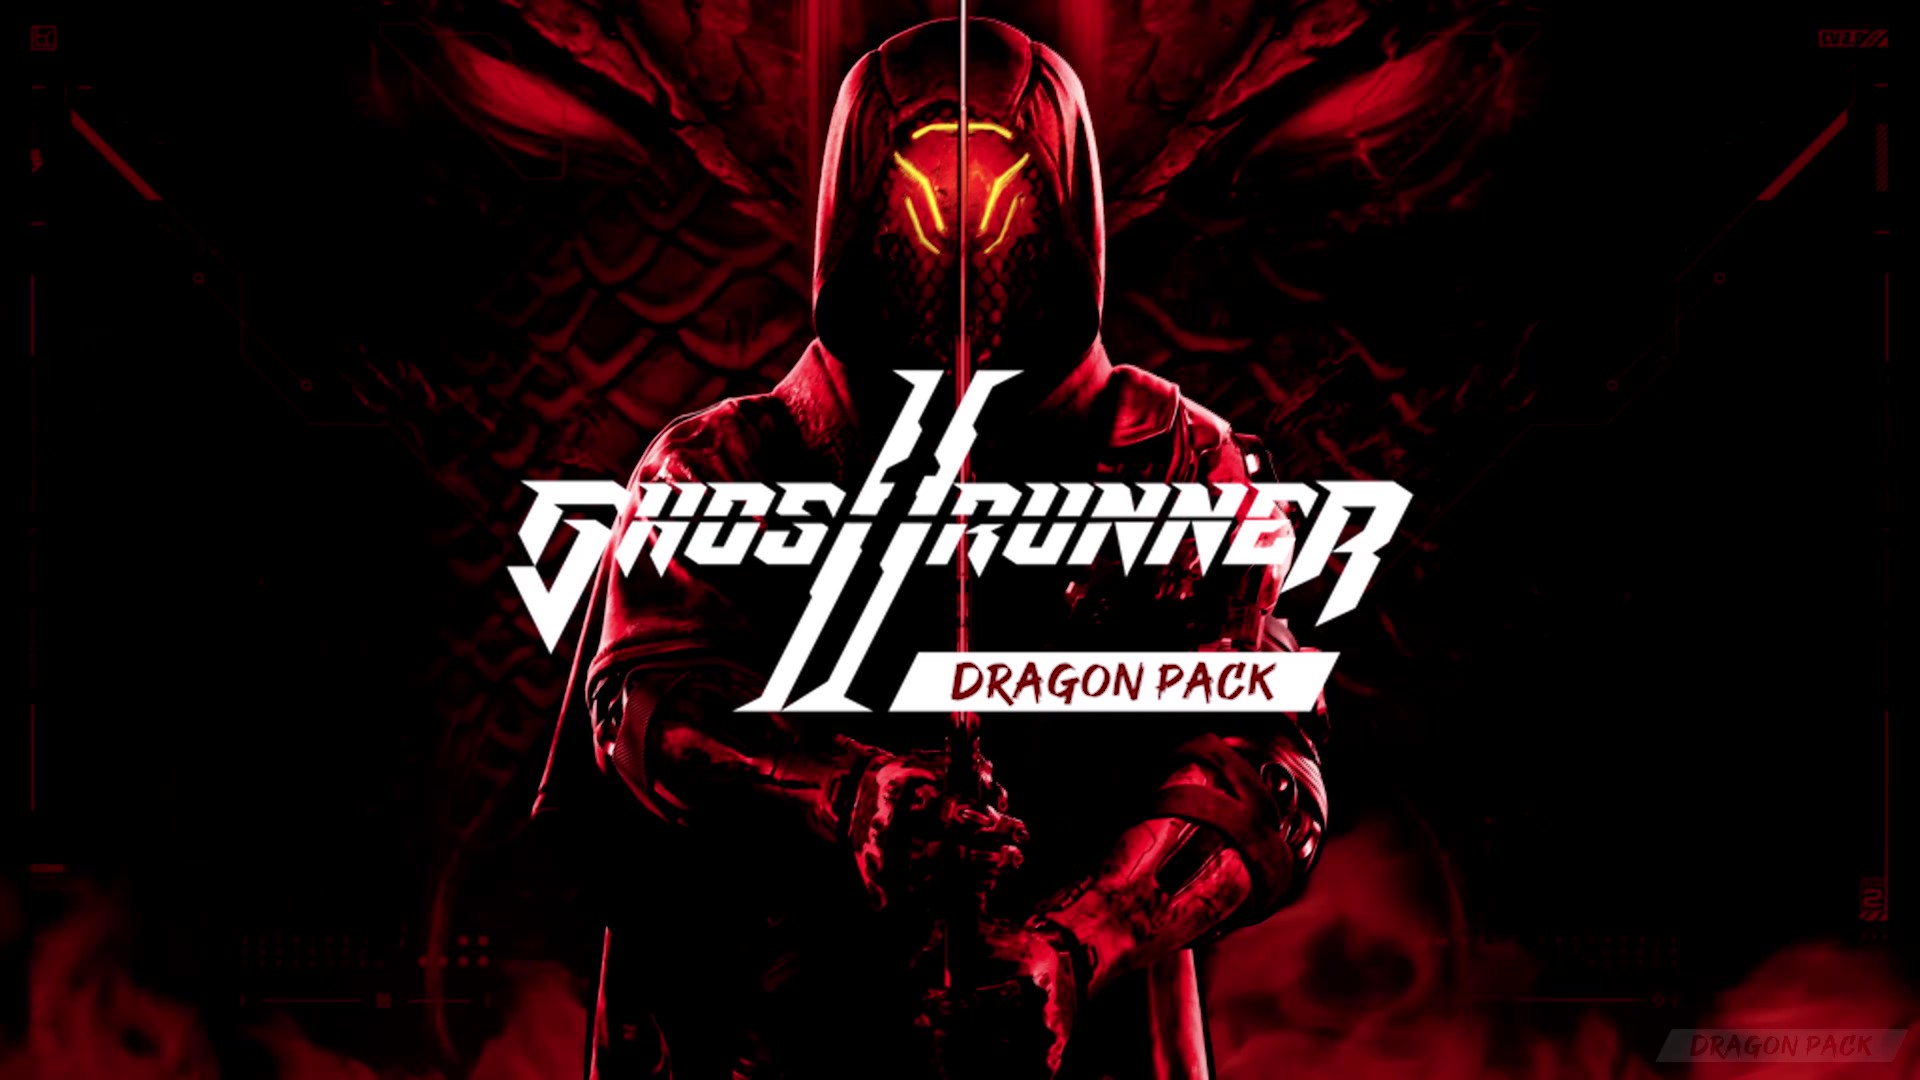 Ghostrunner 2 Dragon Pack DLC, Chinese VO, & RogueRunner.exe Update